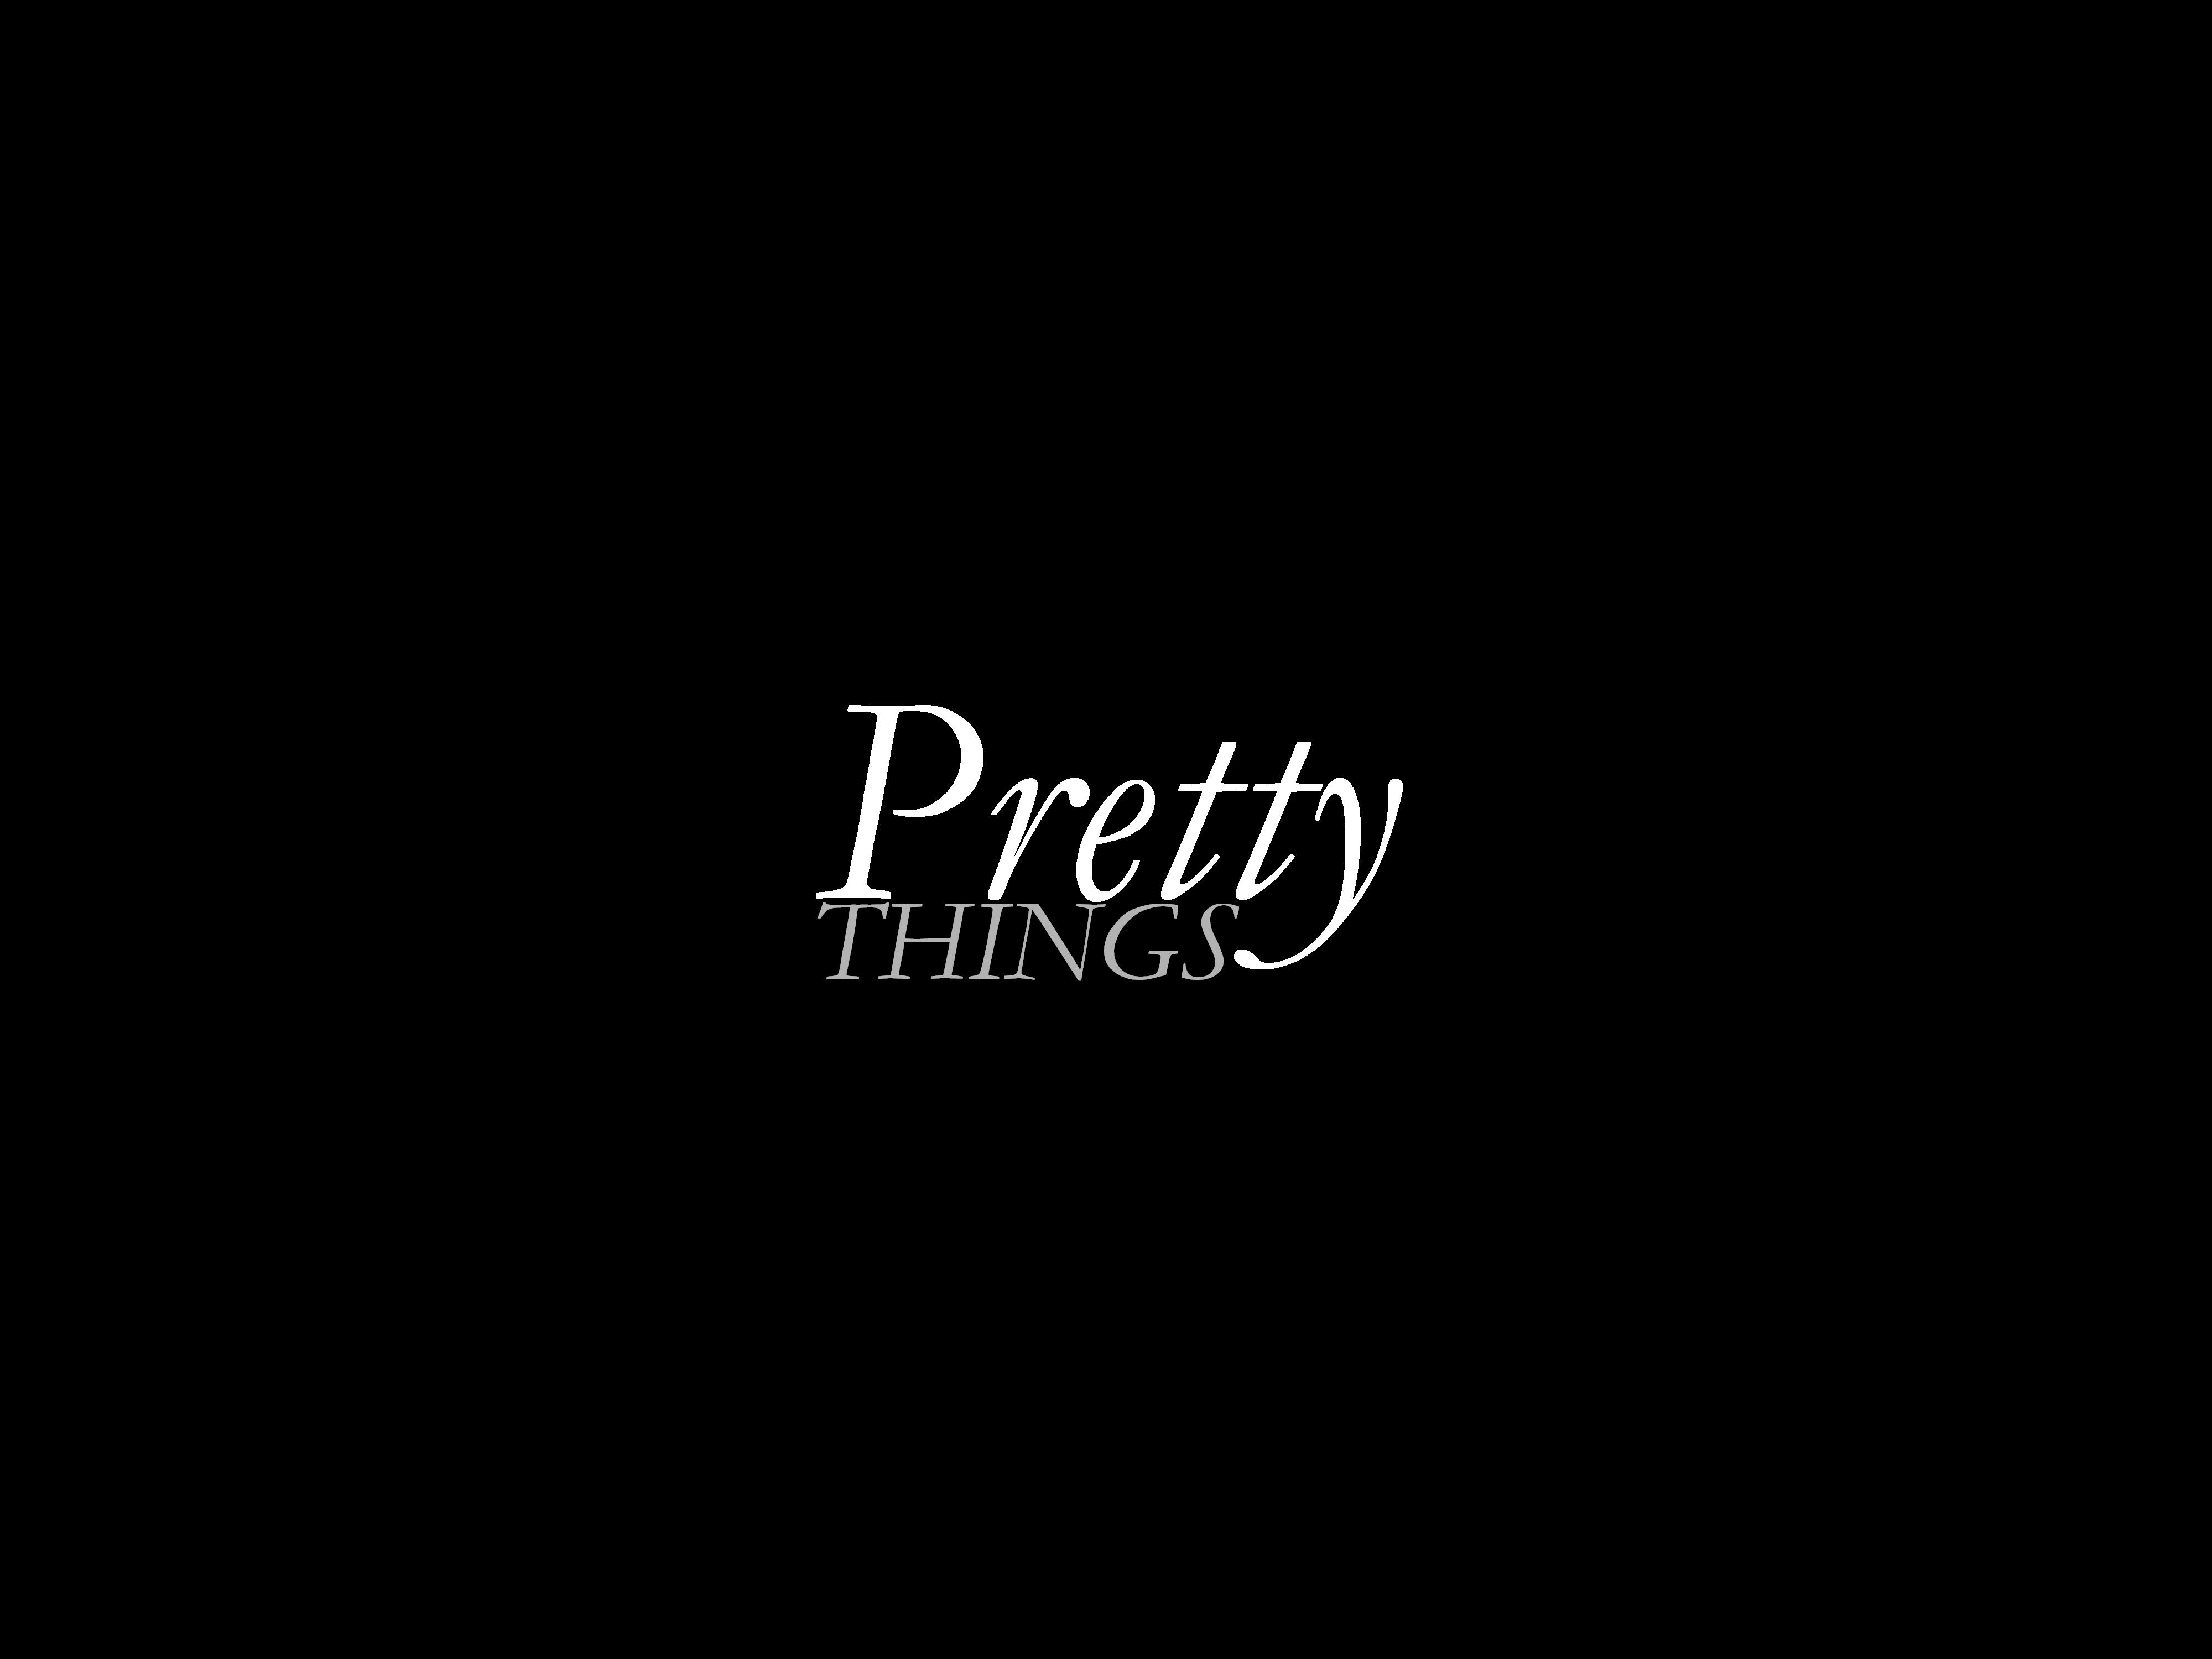 18-04-09 The Pretty Things (1)